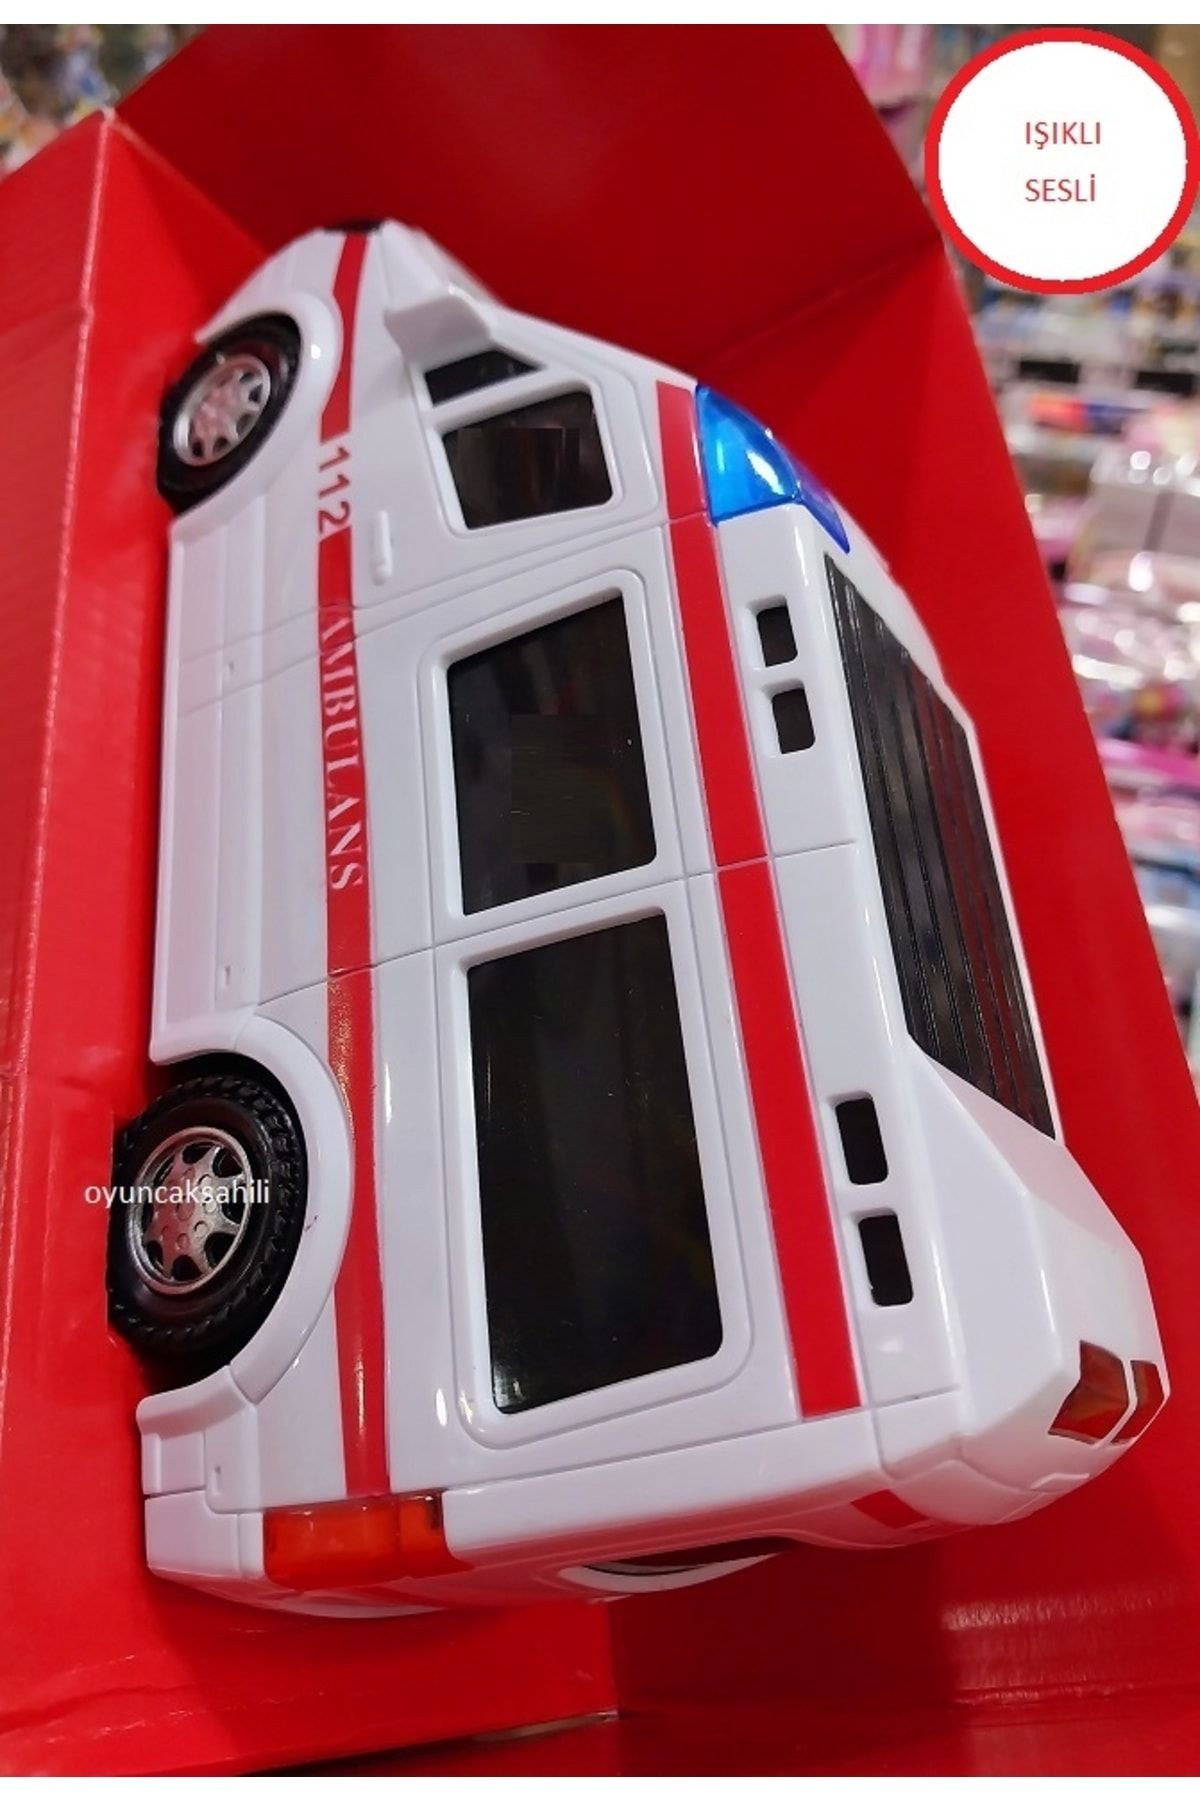 OYUNCAKSAHİLİ Ambulans 112 Acil Servis Minibüs Işıklı Sesli Fonk Erkek Eğitici Oyuncak Ses Efekti Oyuncak Araba